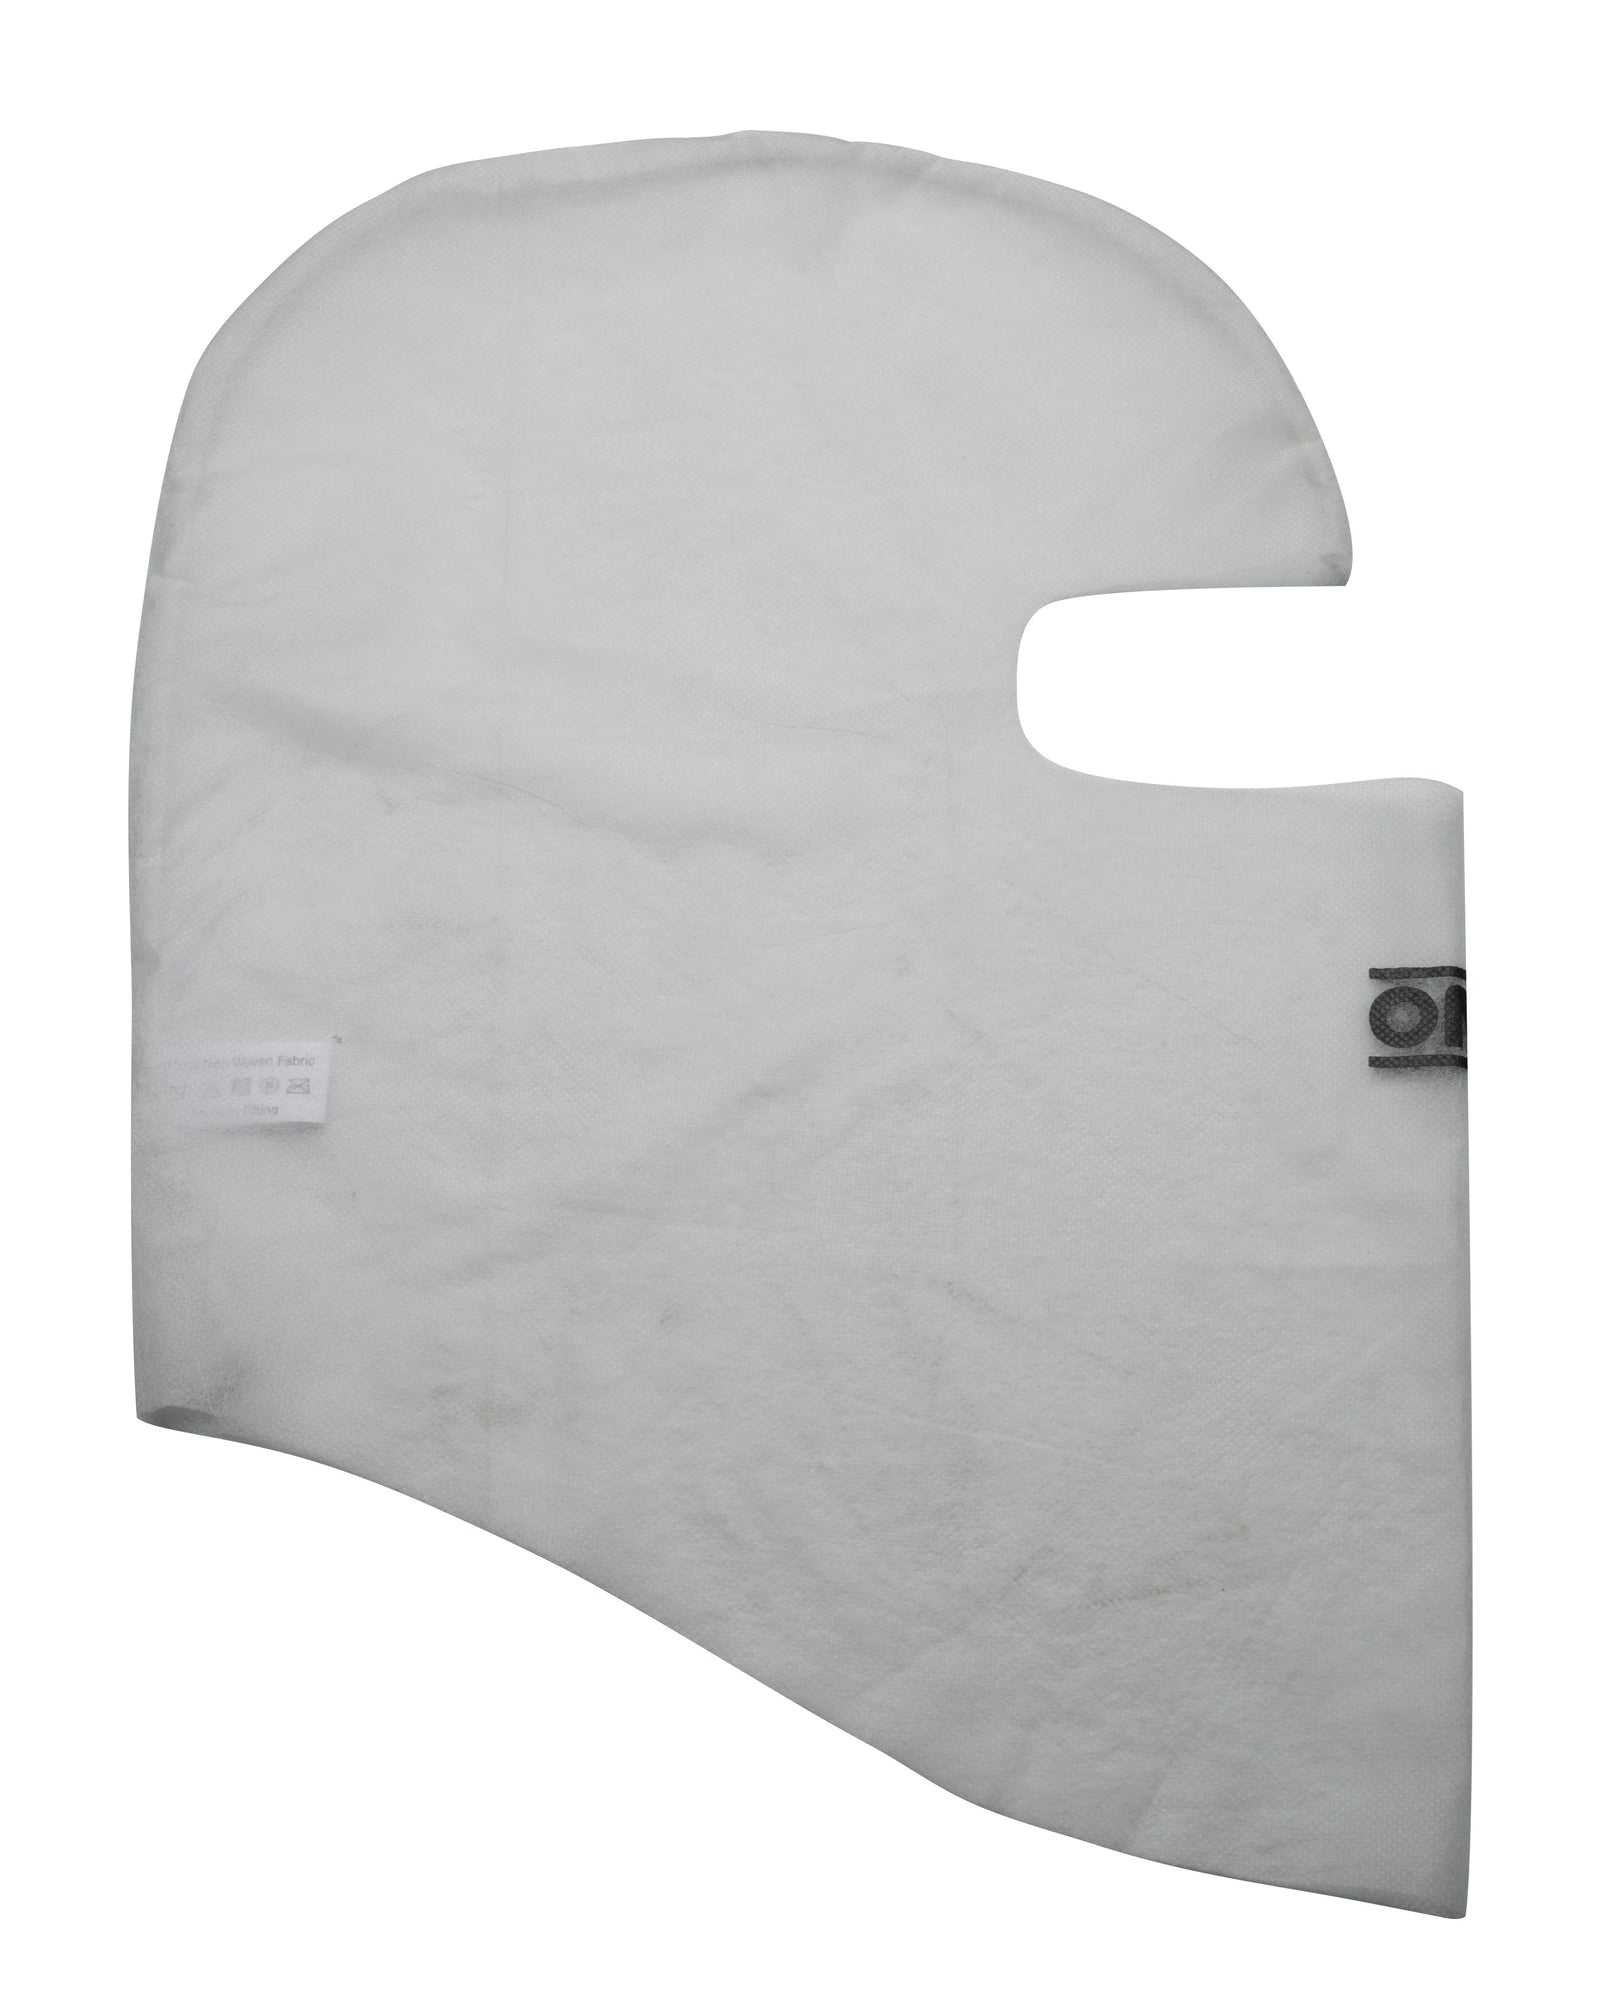 OMP KE0-3026-A01 (KK03026) Disposable balaclavas, 25 pieces, white Photo-0 